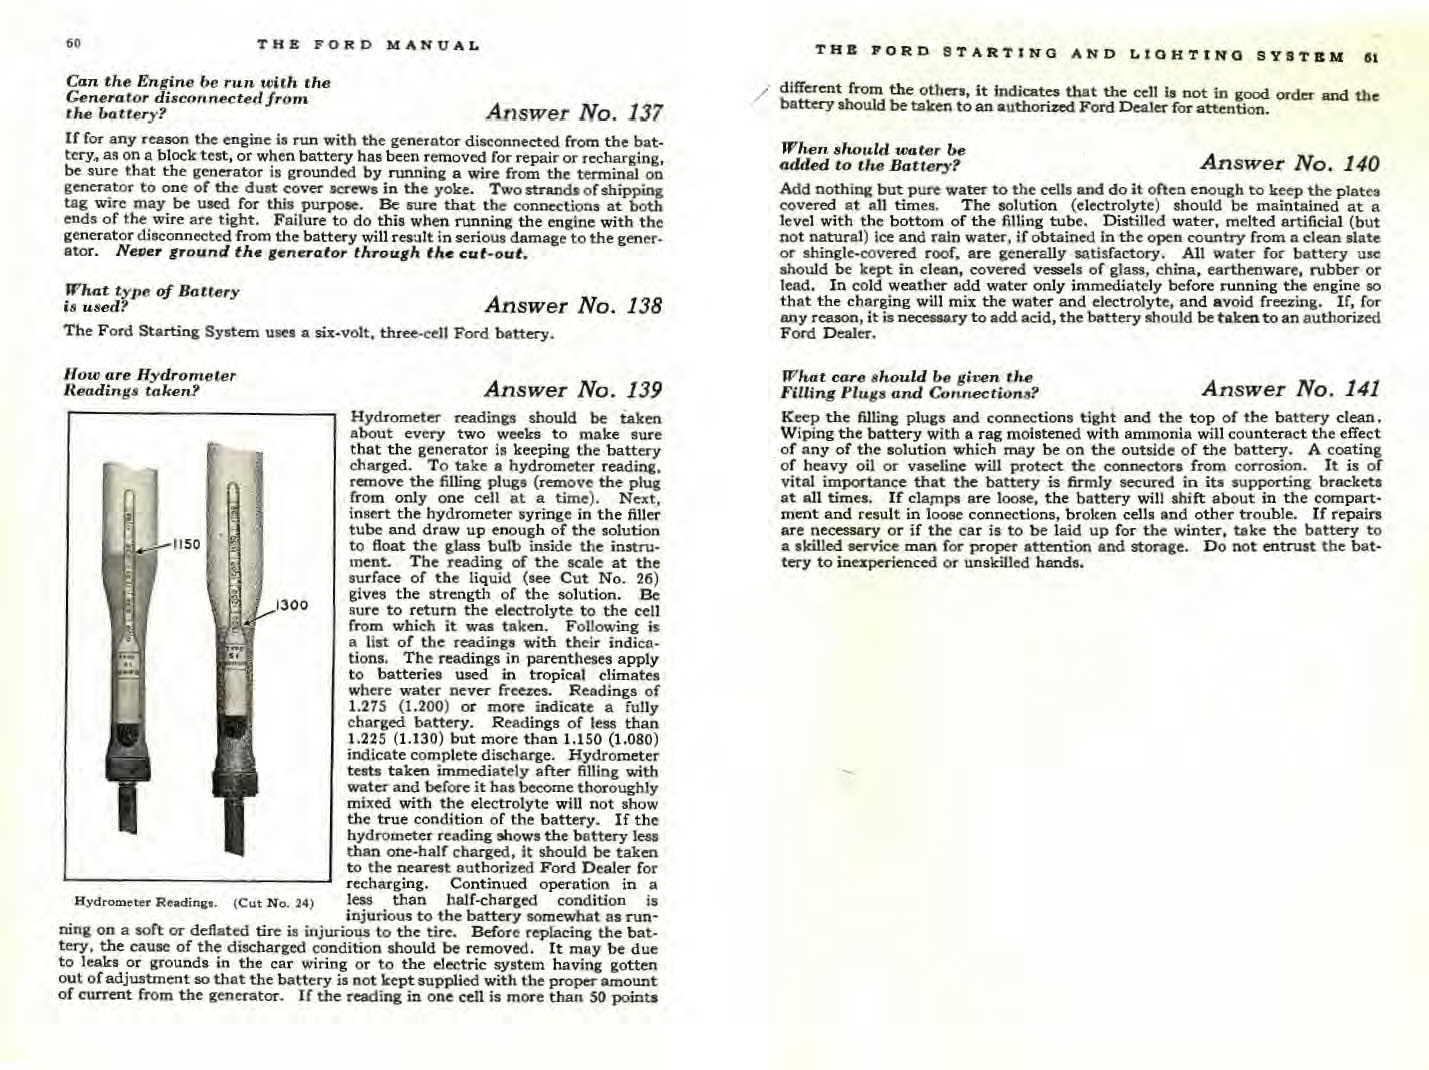 n_1926 Ford Owners Manual-60-61.jpg